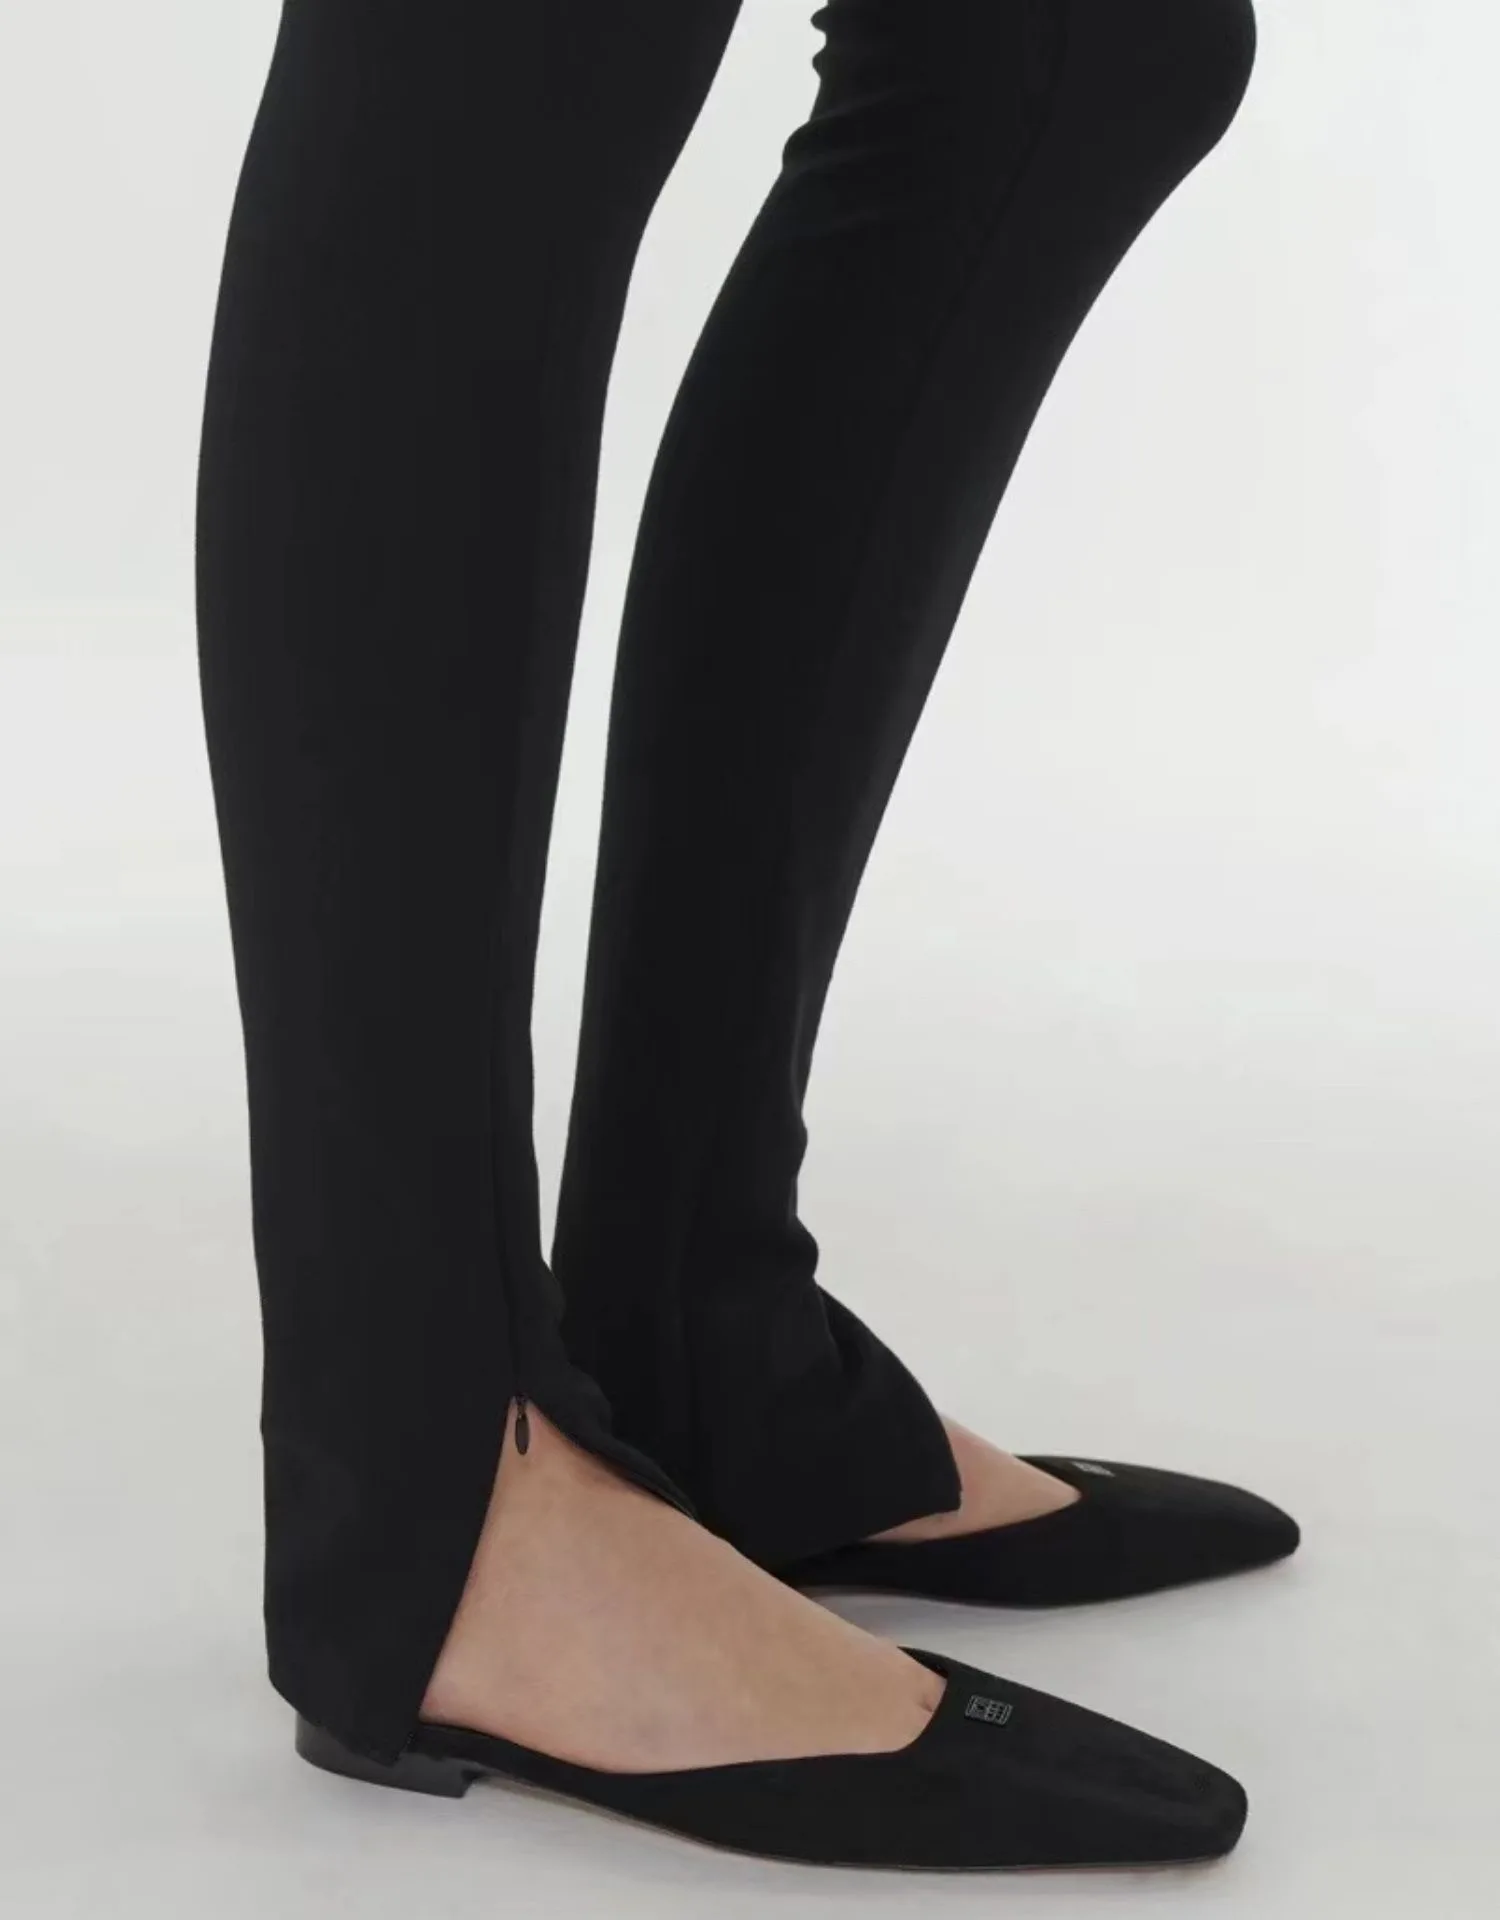 sweatpants High Fashion Women Pants High Stretch Slit Zipper Leggings Womens High Fashion Black Pants crop pants for women